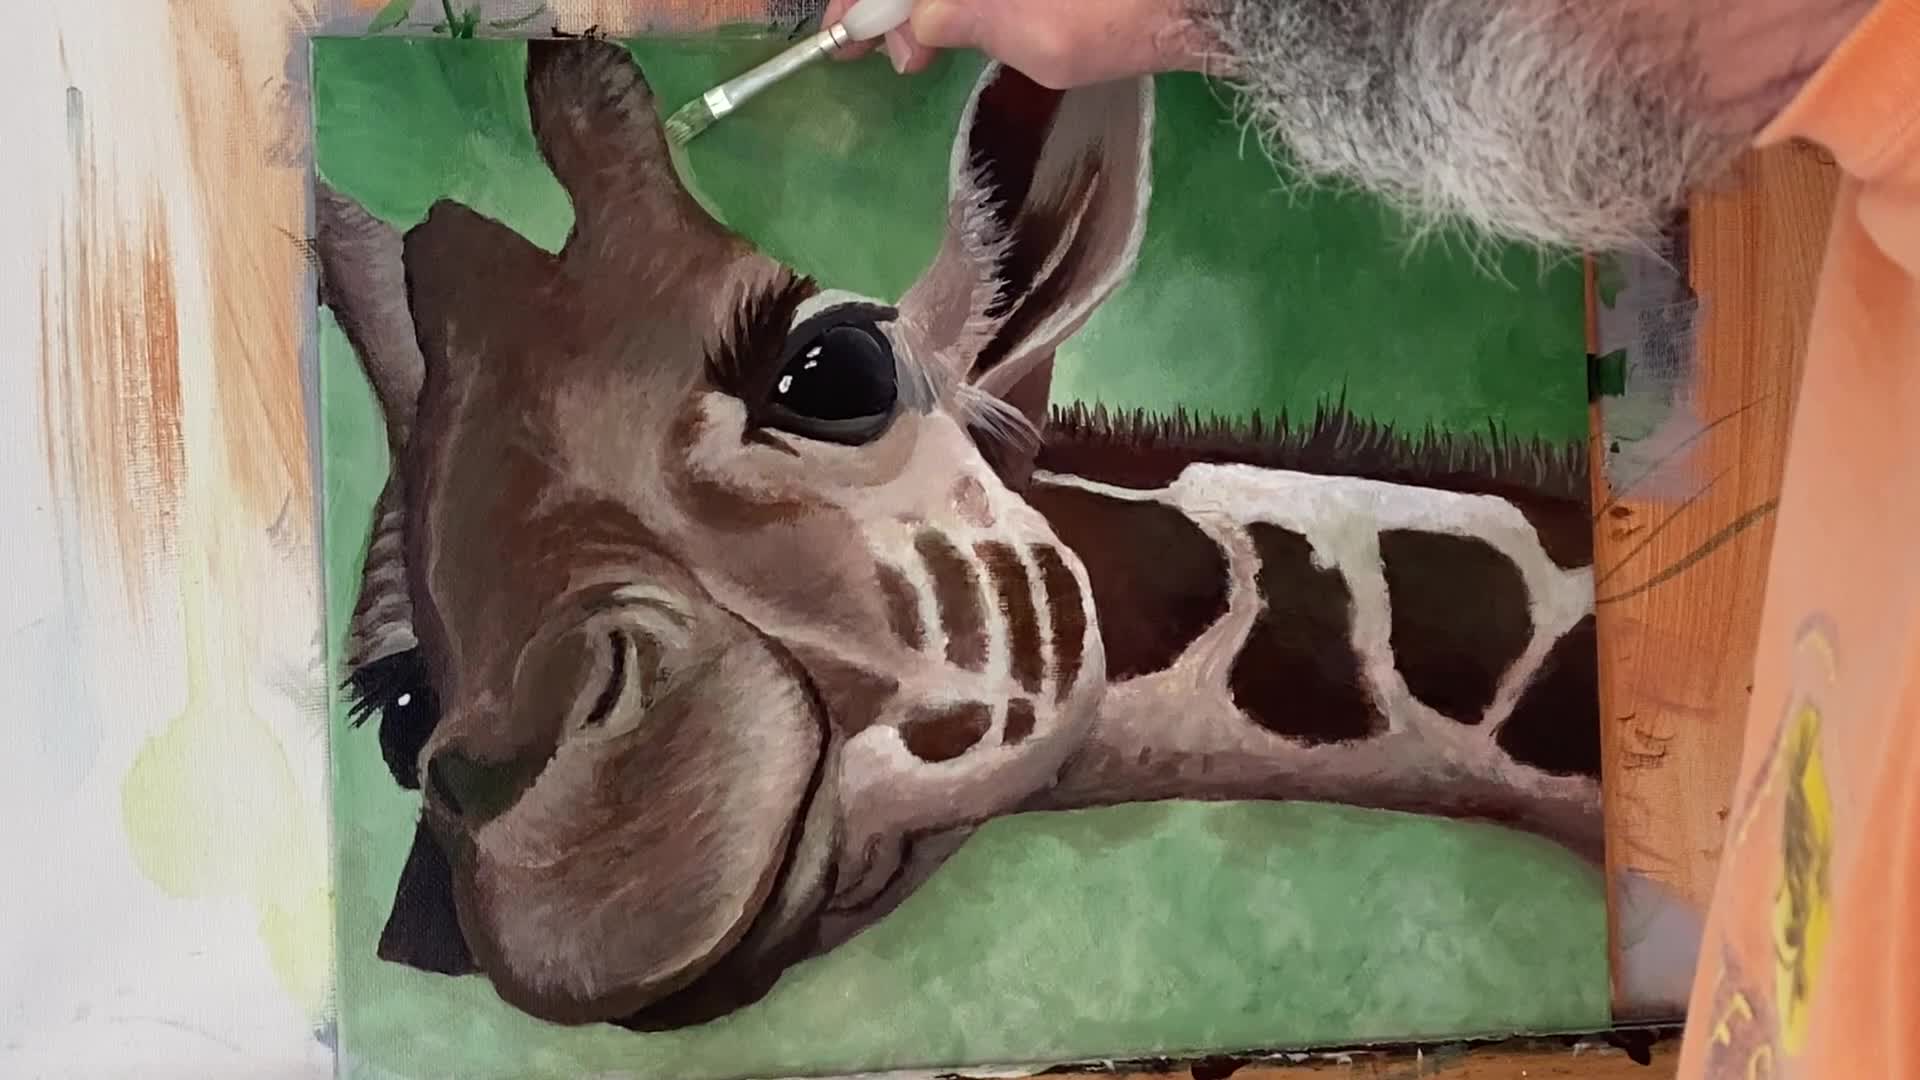 Red And Green Giraffe full video